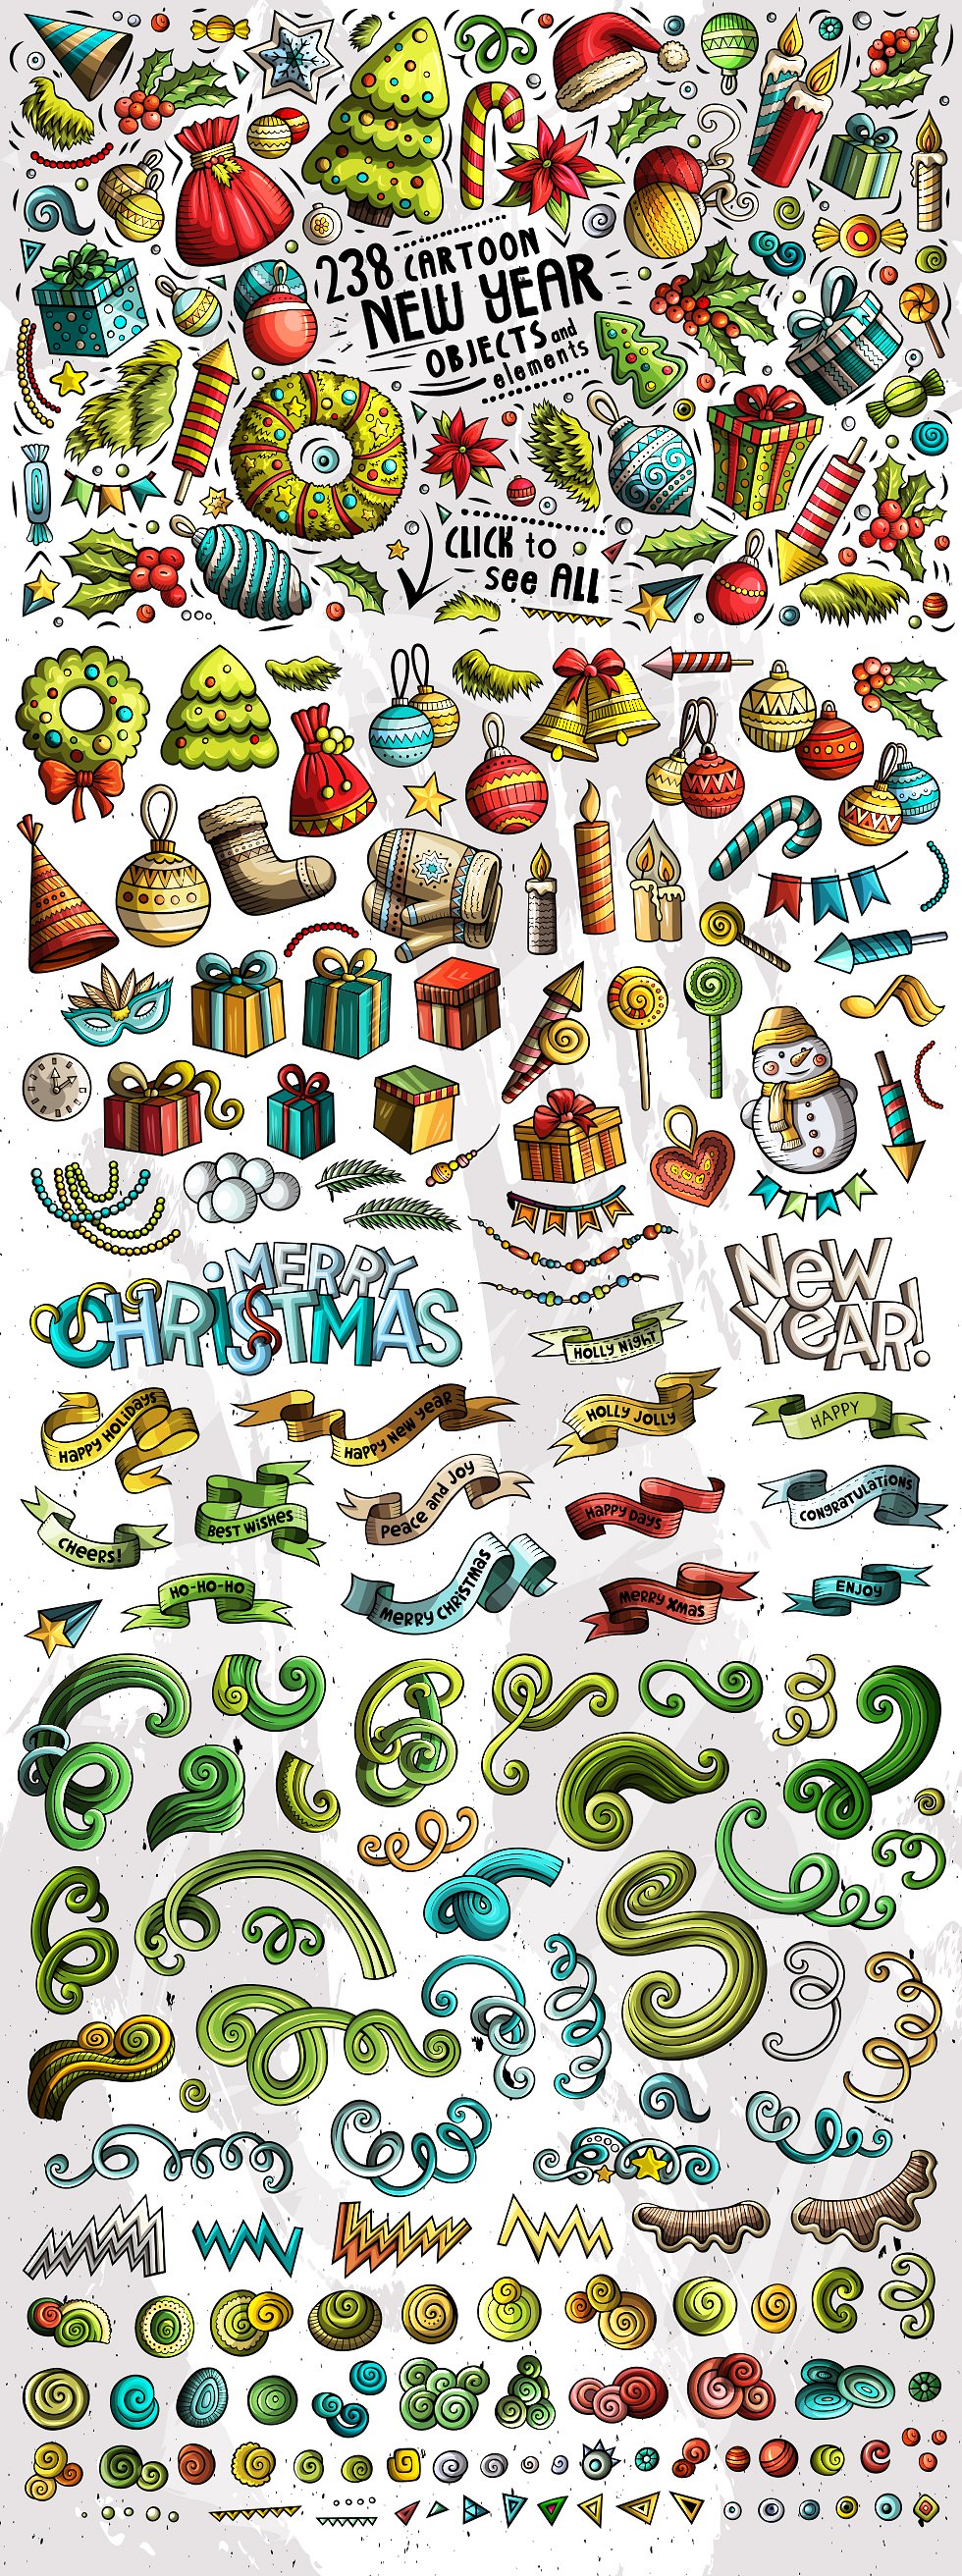 新年快乐和圣诞快乐元素涂鸦图案集 Happy New Year Doodle Big Pack插图2